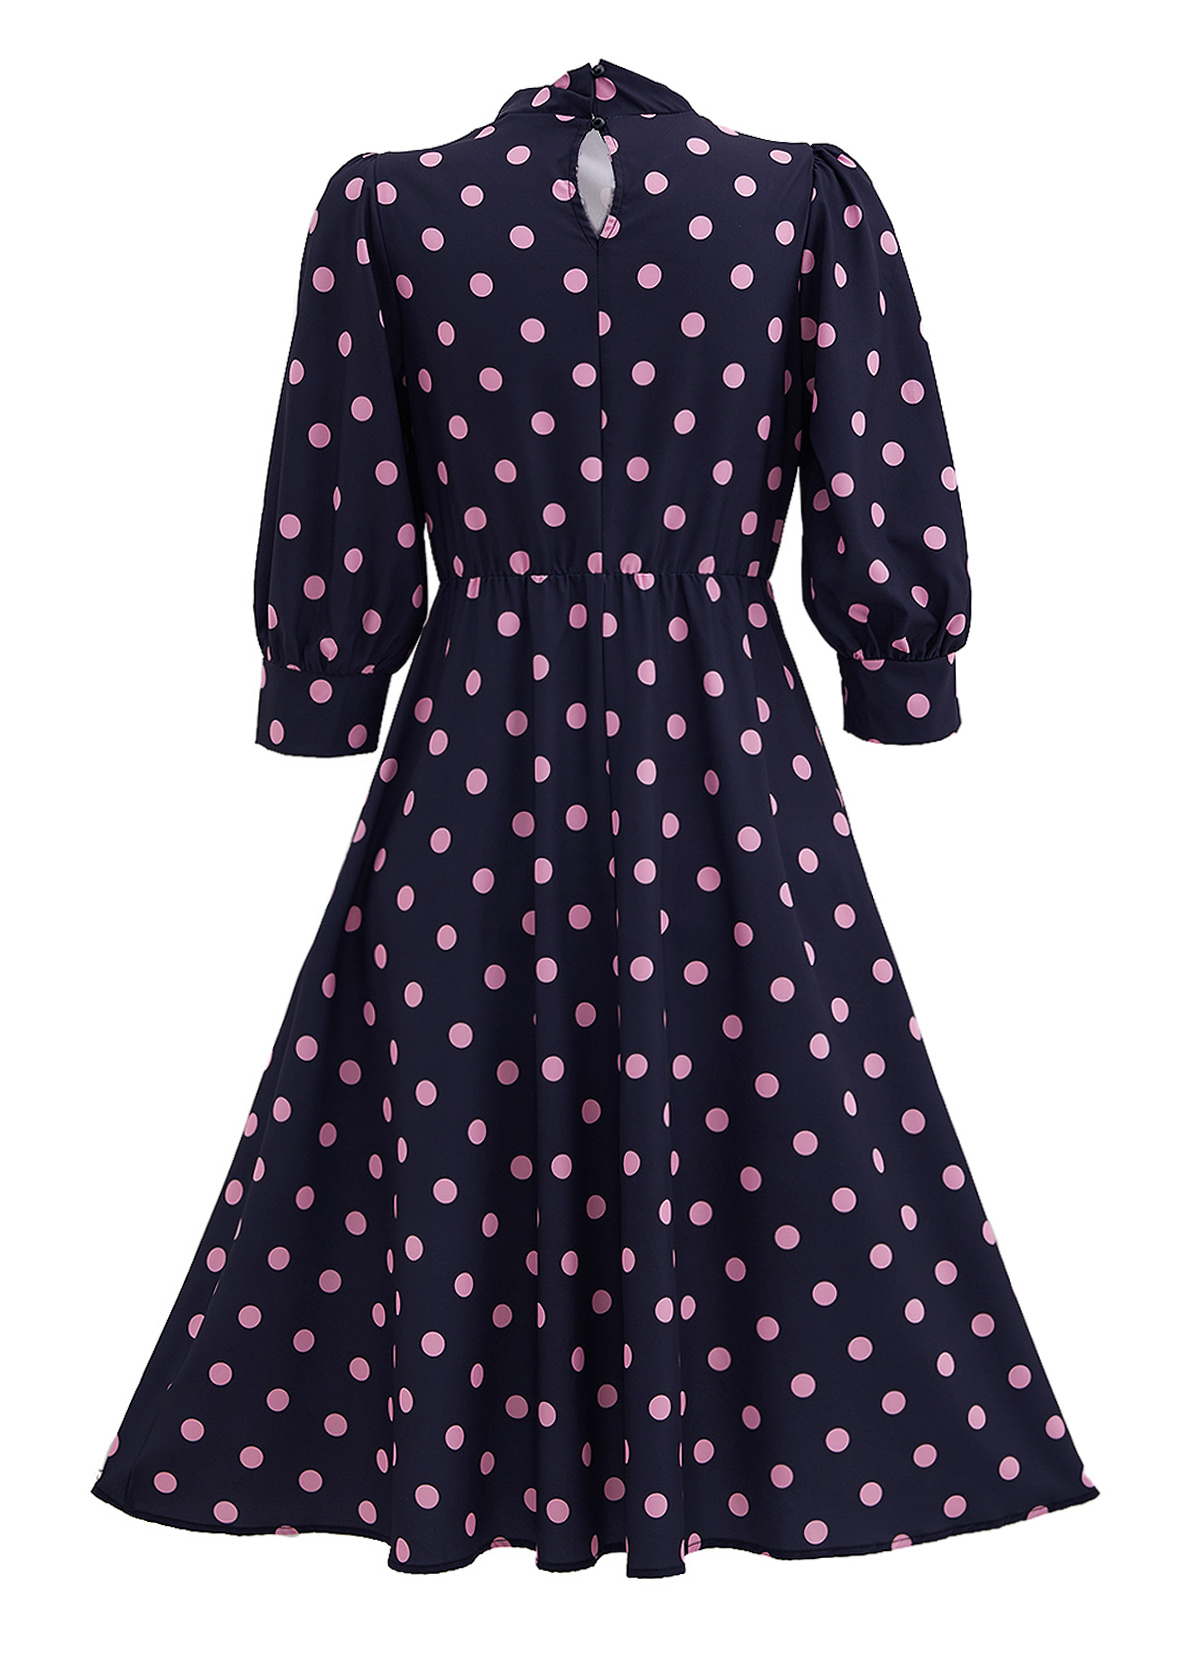 Polka Dot Cut Out Black Stand Collar Dress